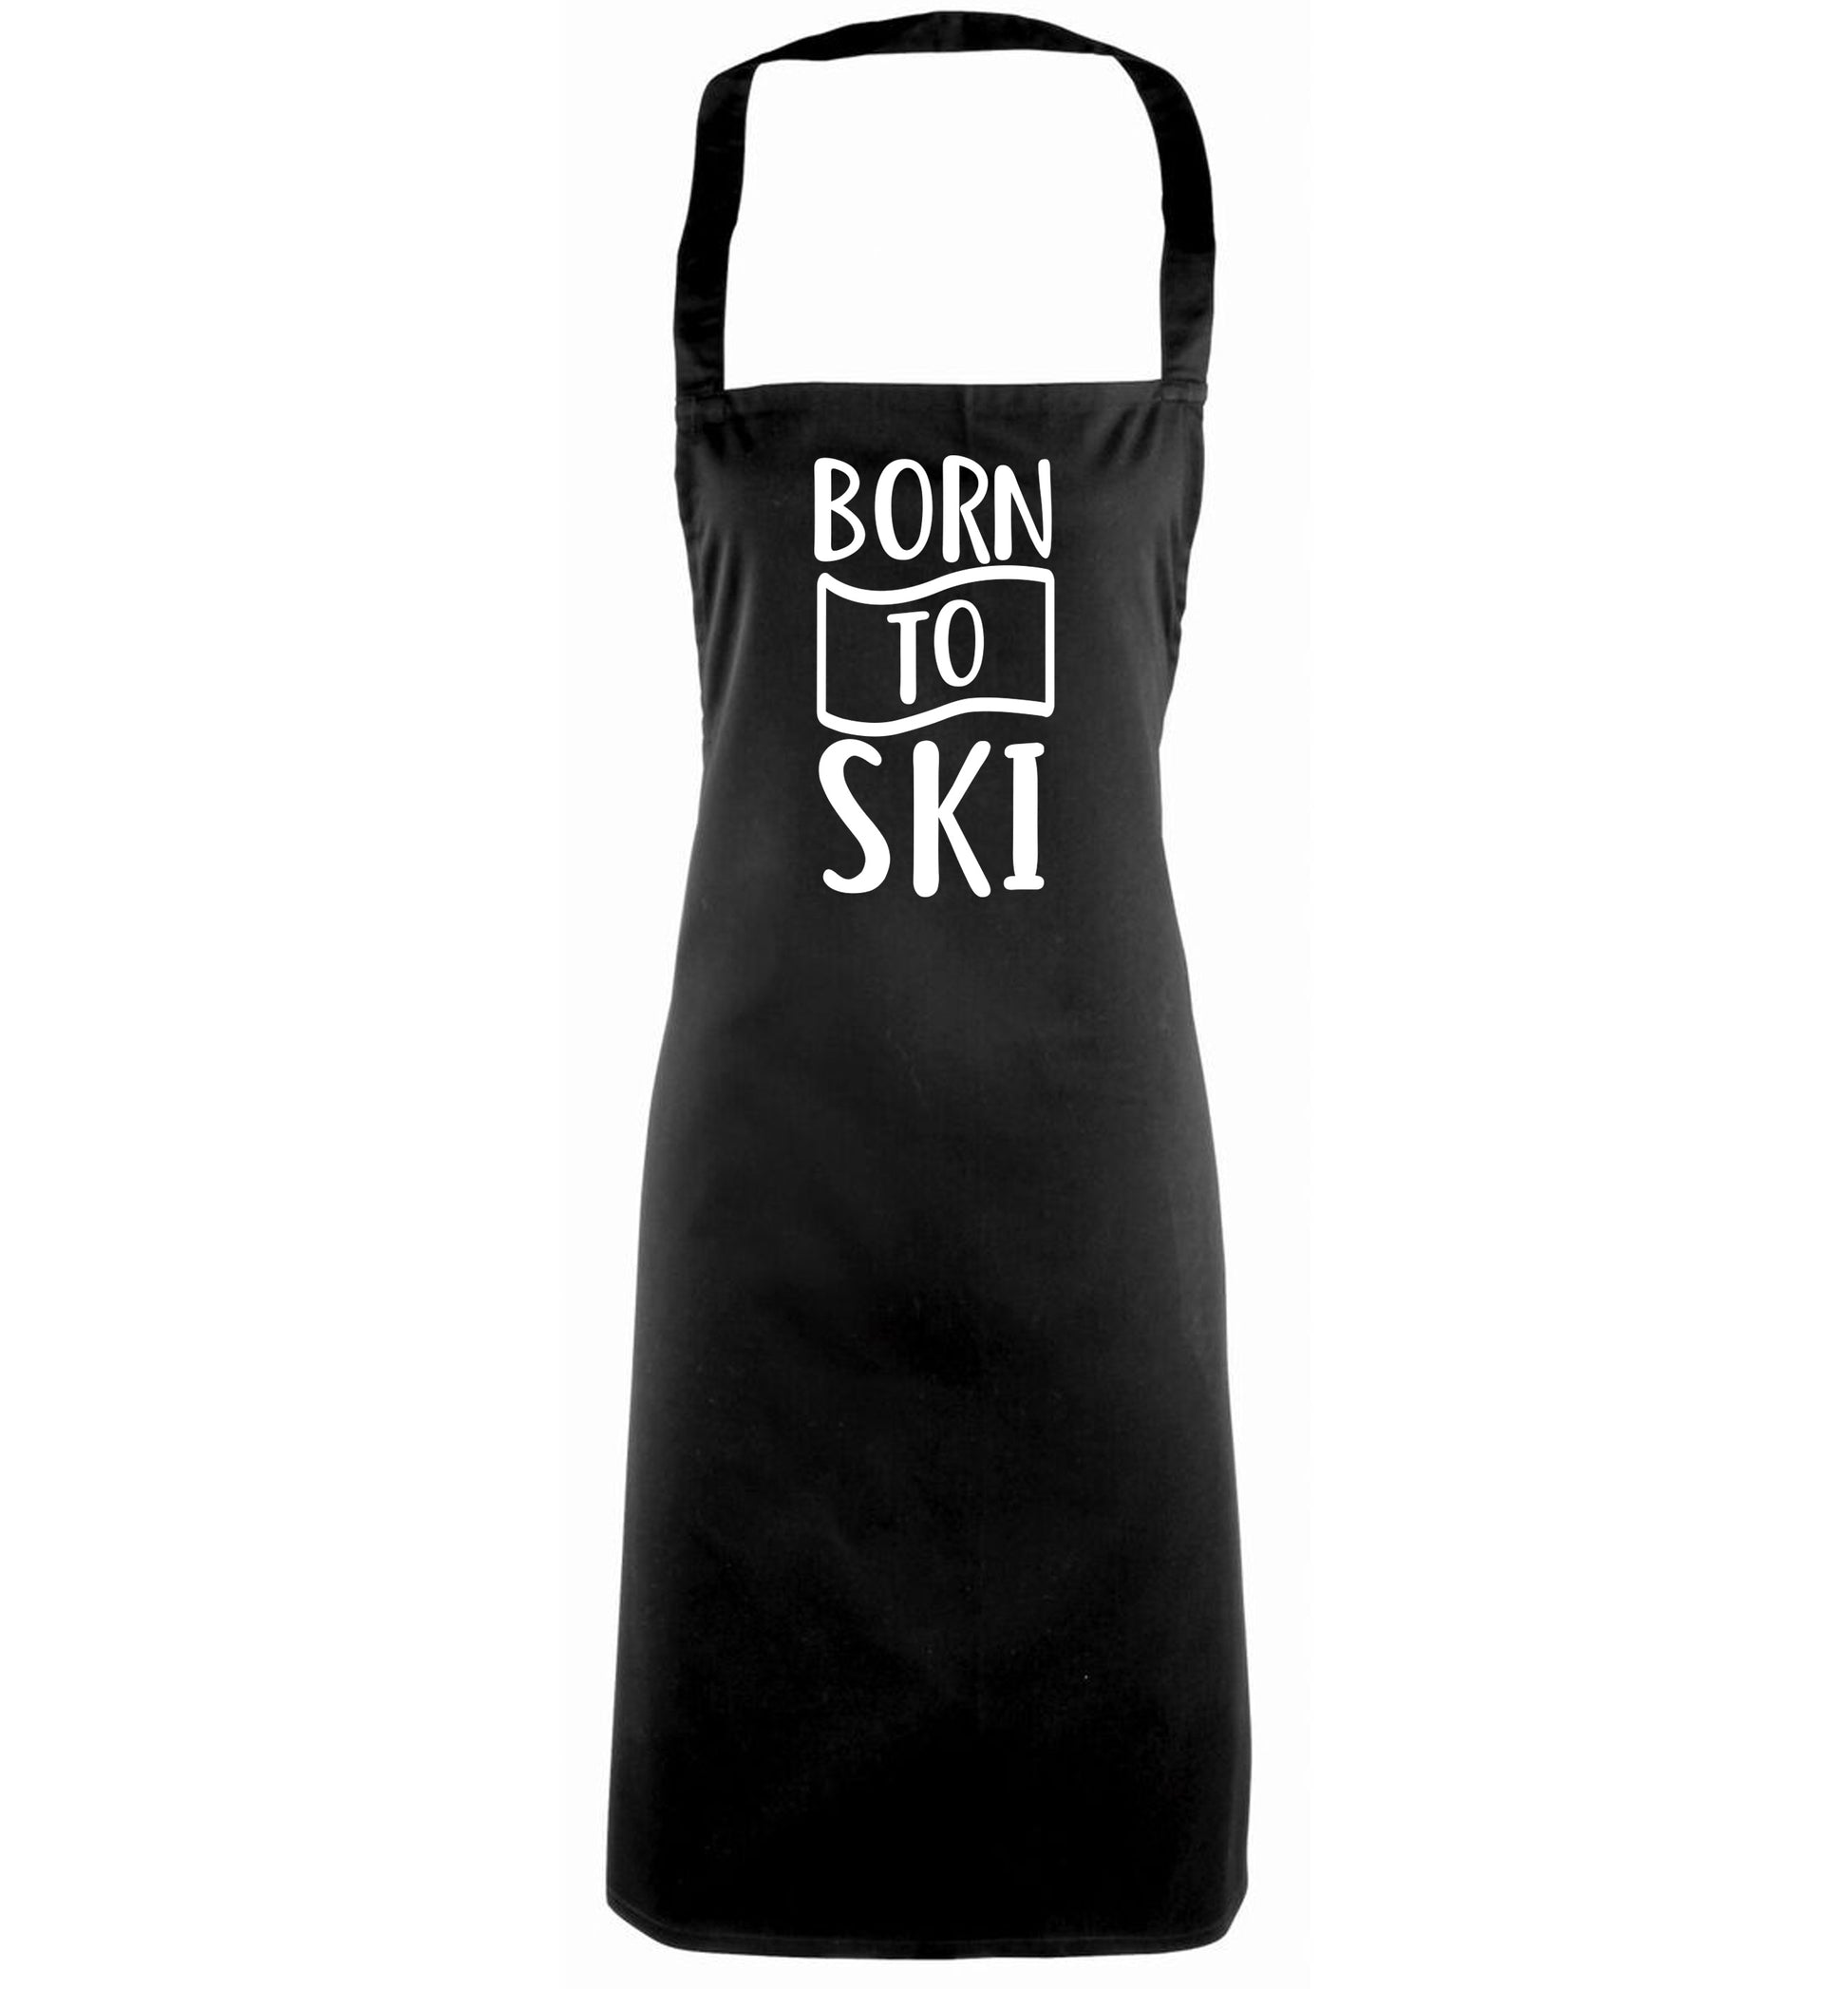 Born to ski black apron